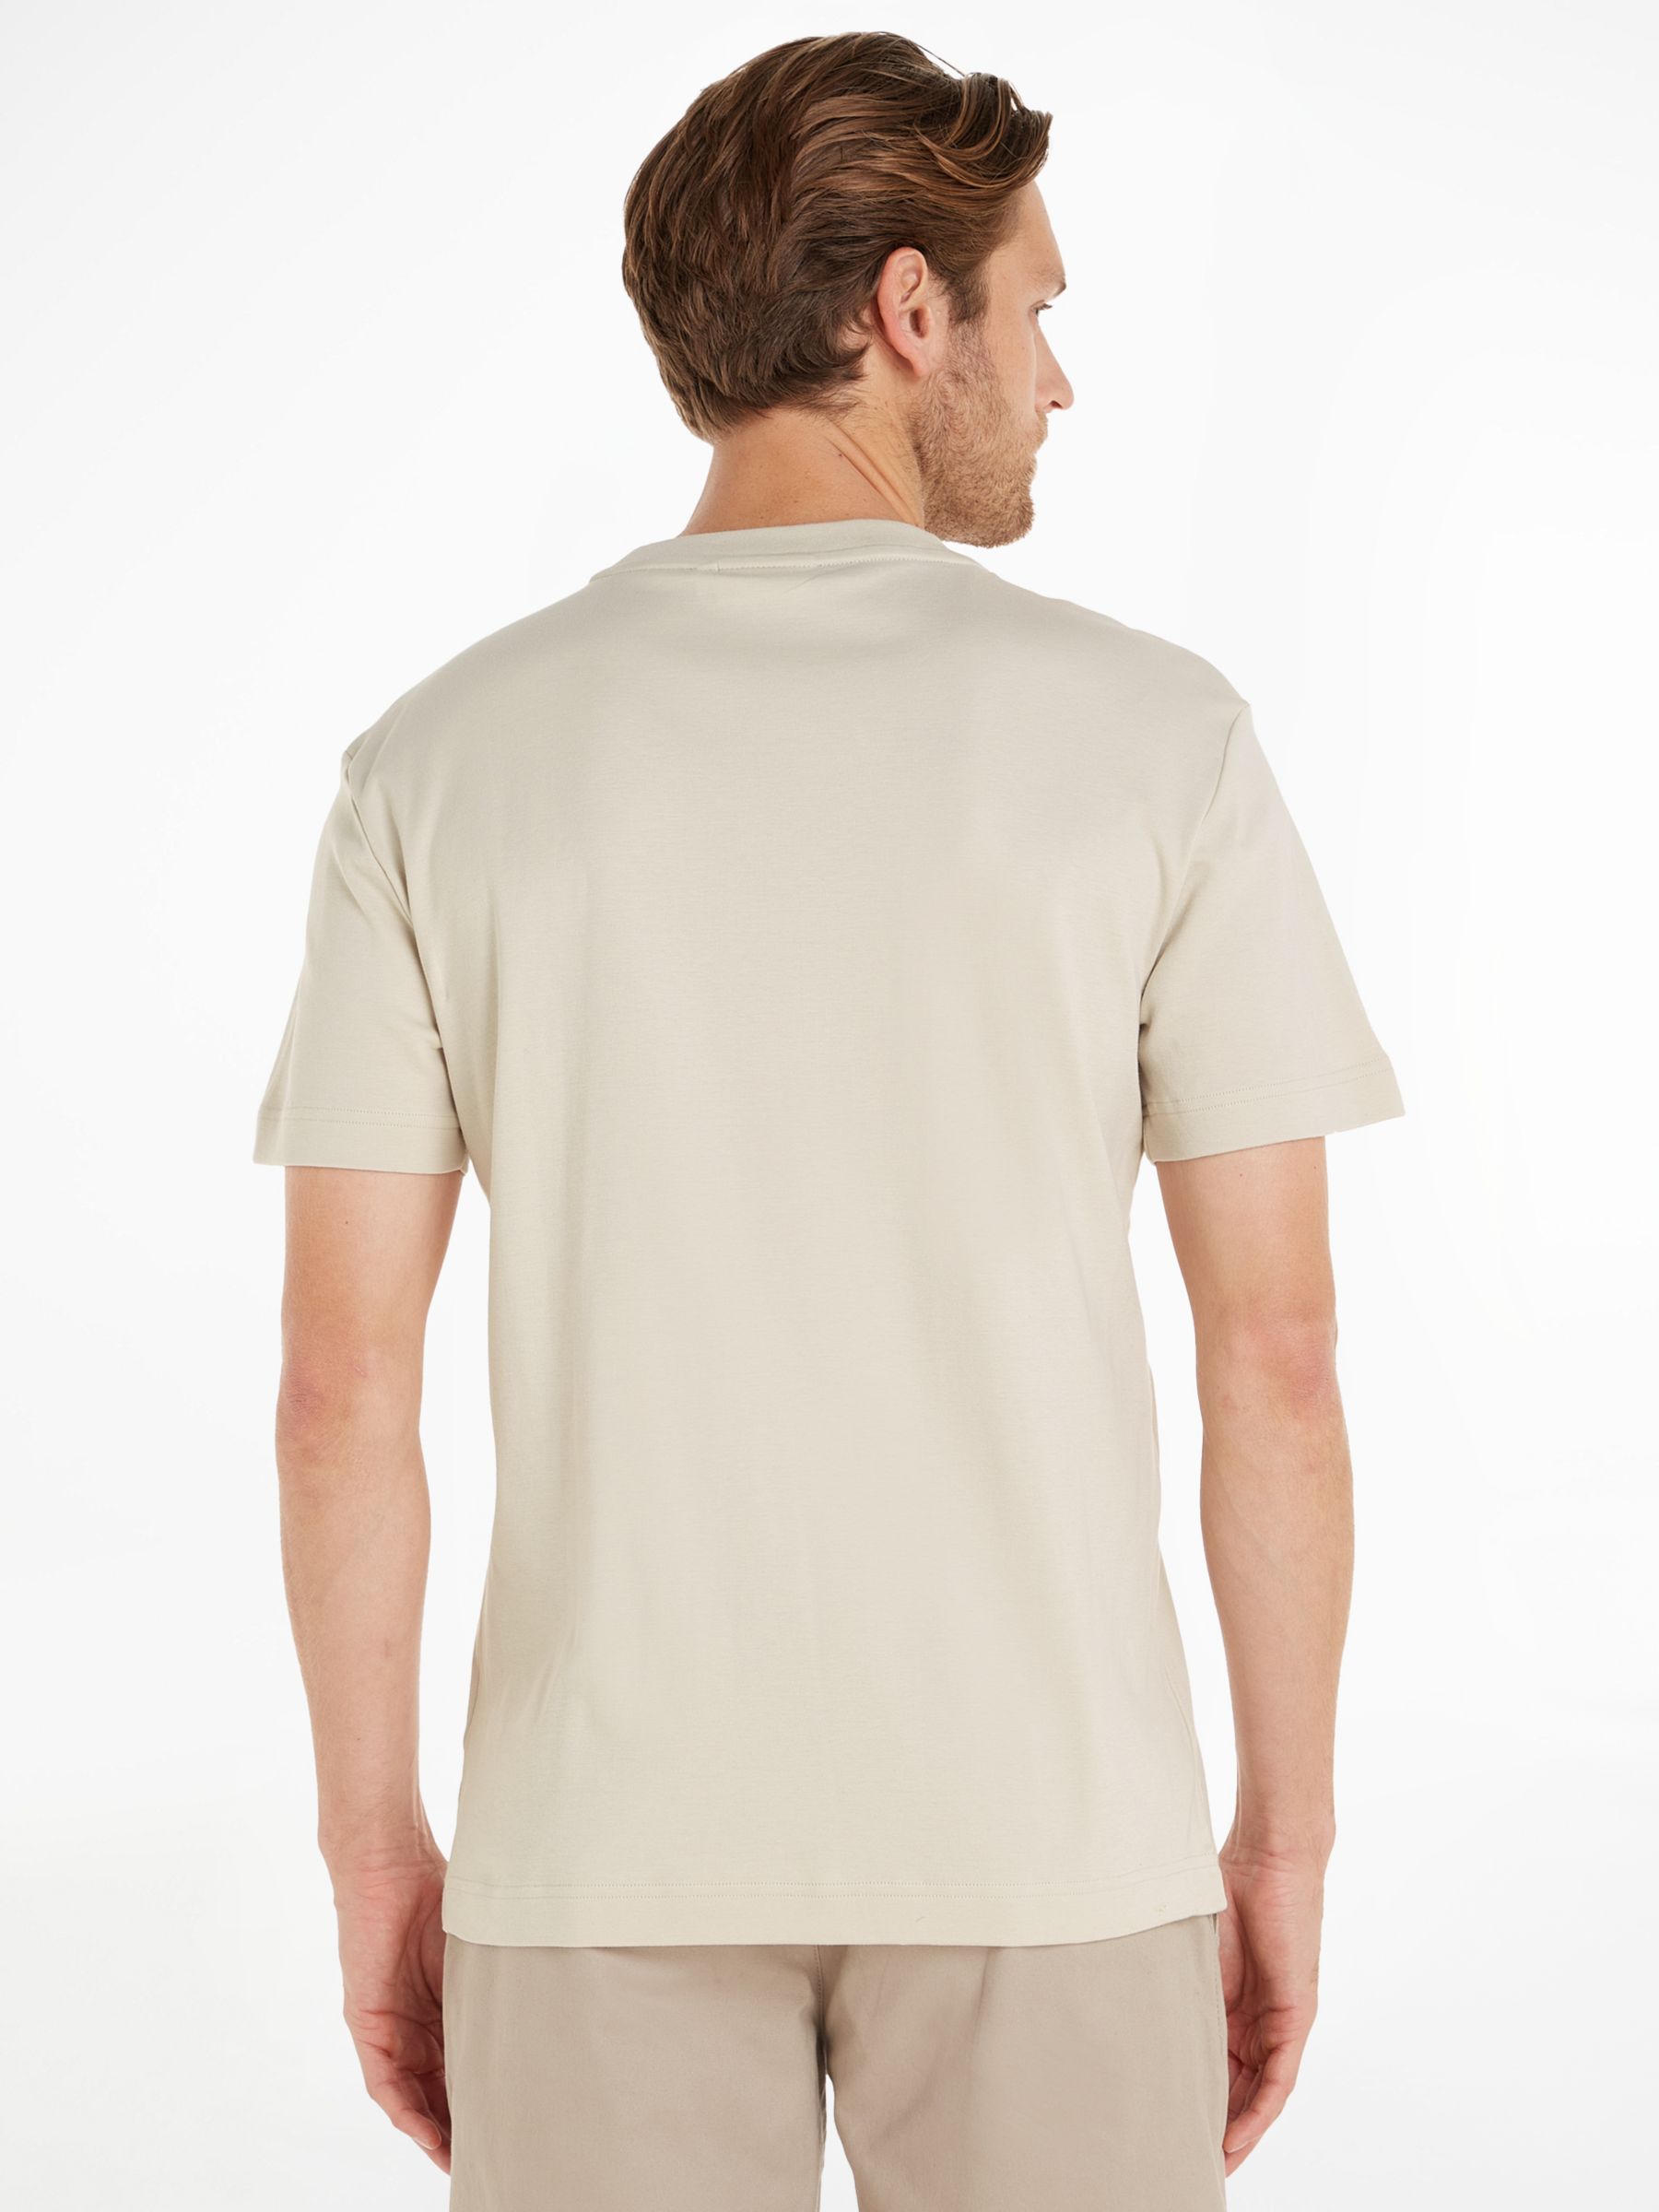 Calvin Klein Micro T-Shirt, Logo Partners Stony Beige at Interlock John & Lewis